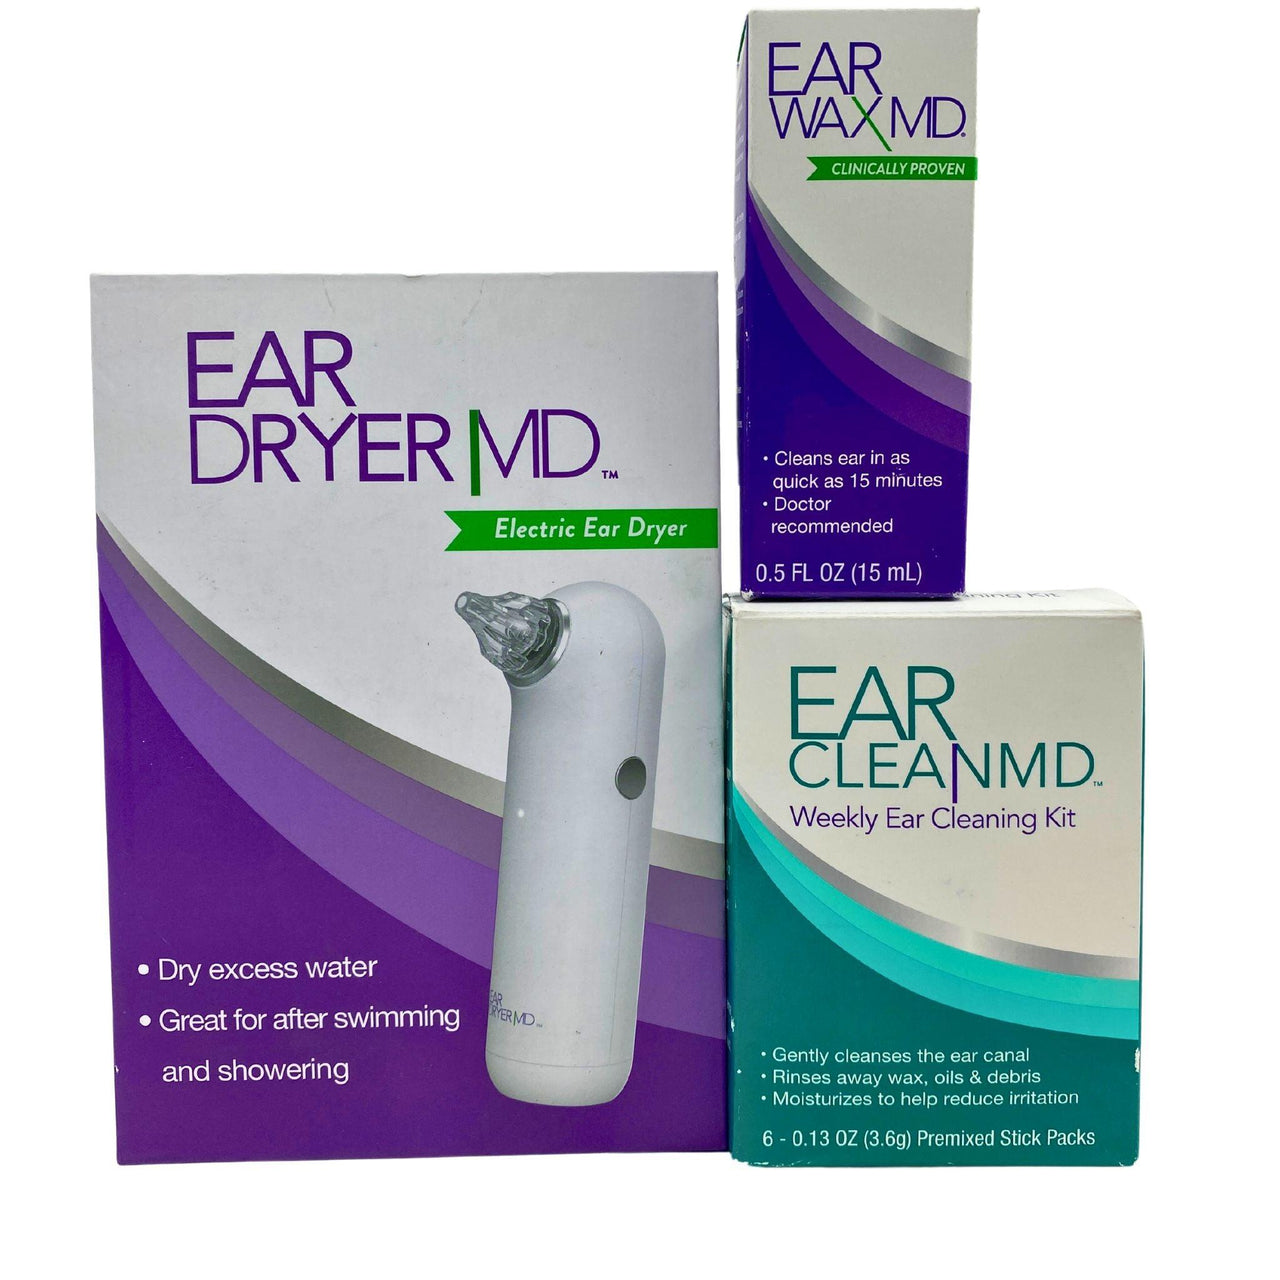 Ear Clean MD,Ear Dryer MD & Ear Wax MD Mix (50 Pcs Lot) - Discount Wholesalers Inc